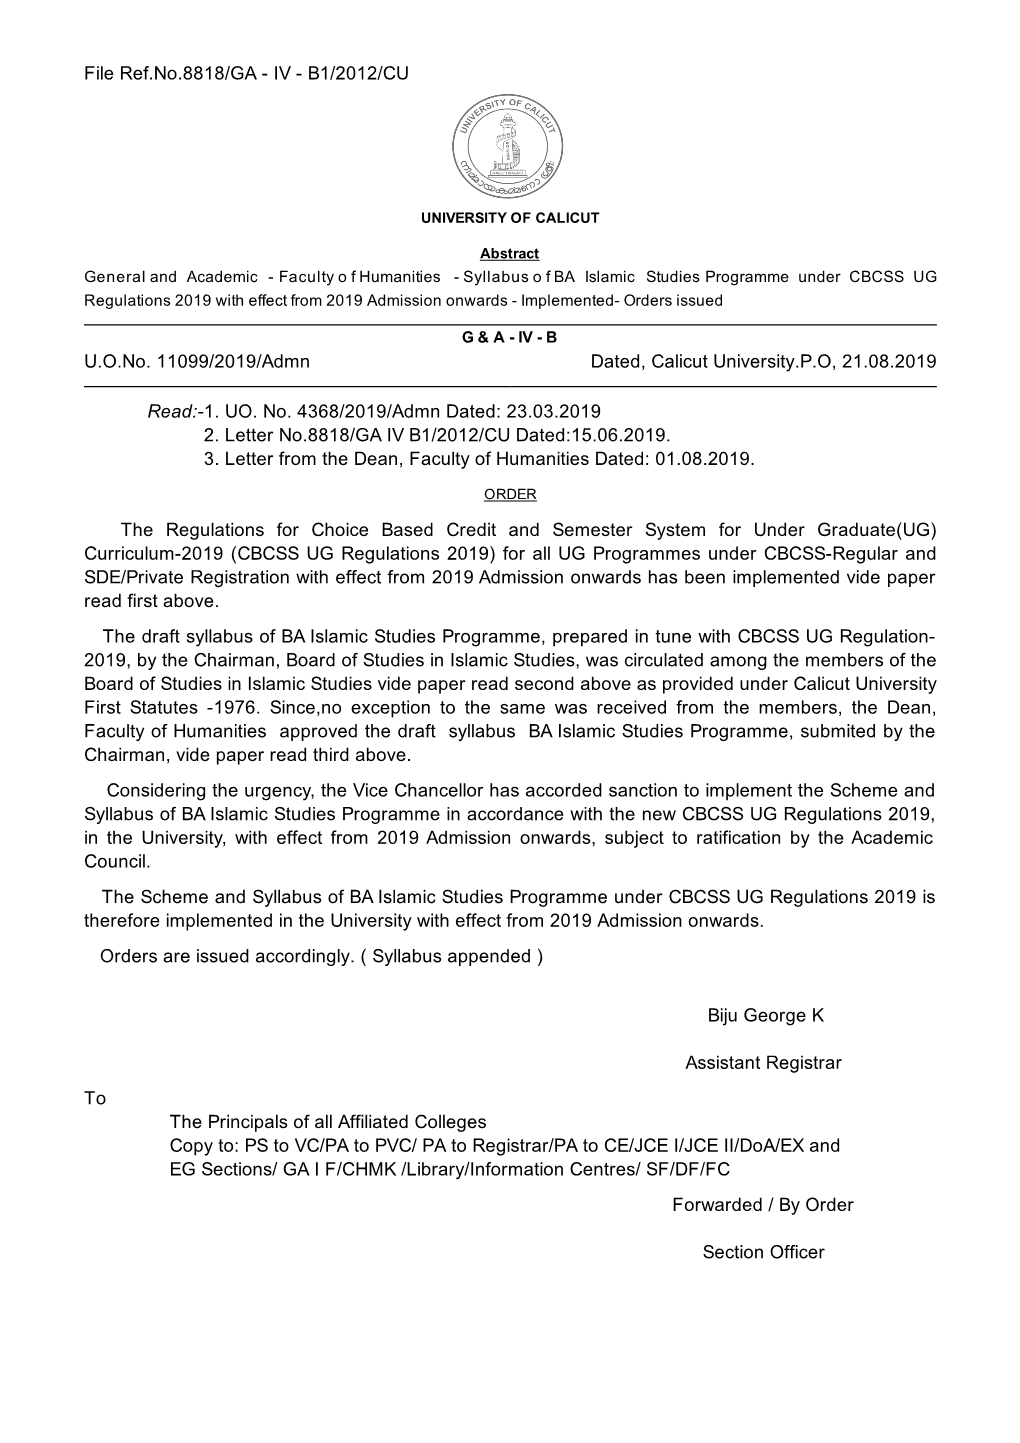 U.O.No. 11099/2019/Admn Dated, Calicut University.P.O, 21.08.2019 Biju George K Assistant Registrar Forwarded / by Order Section